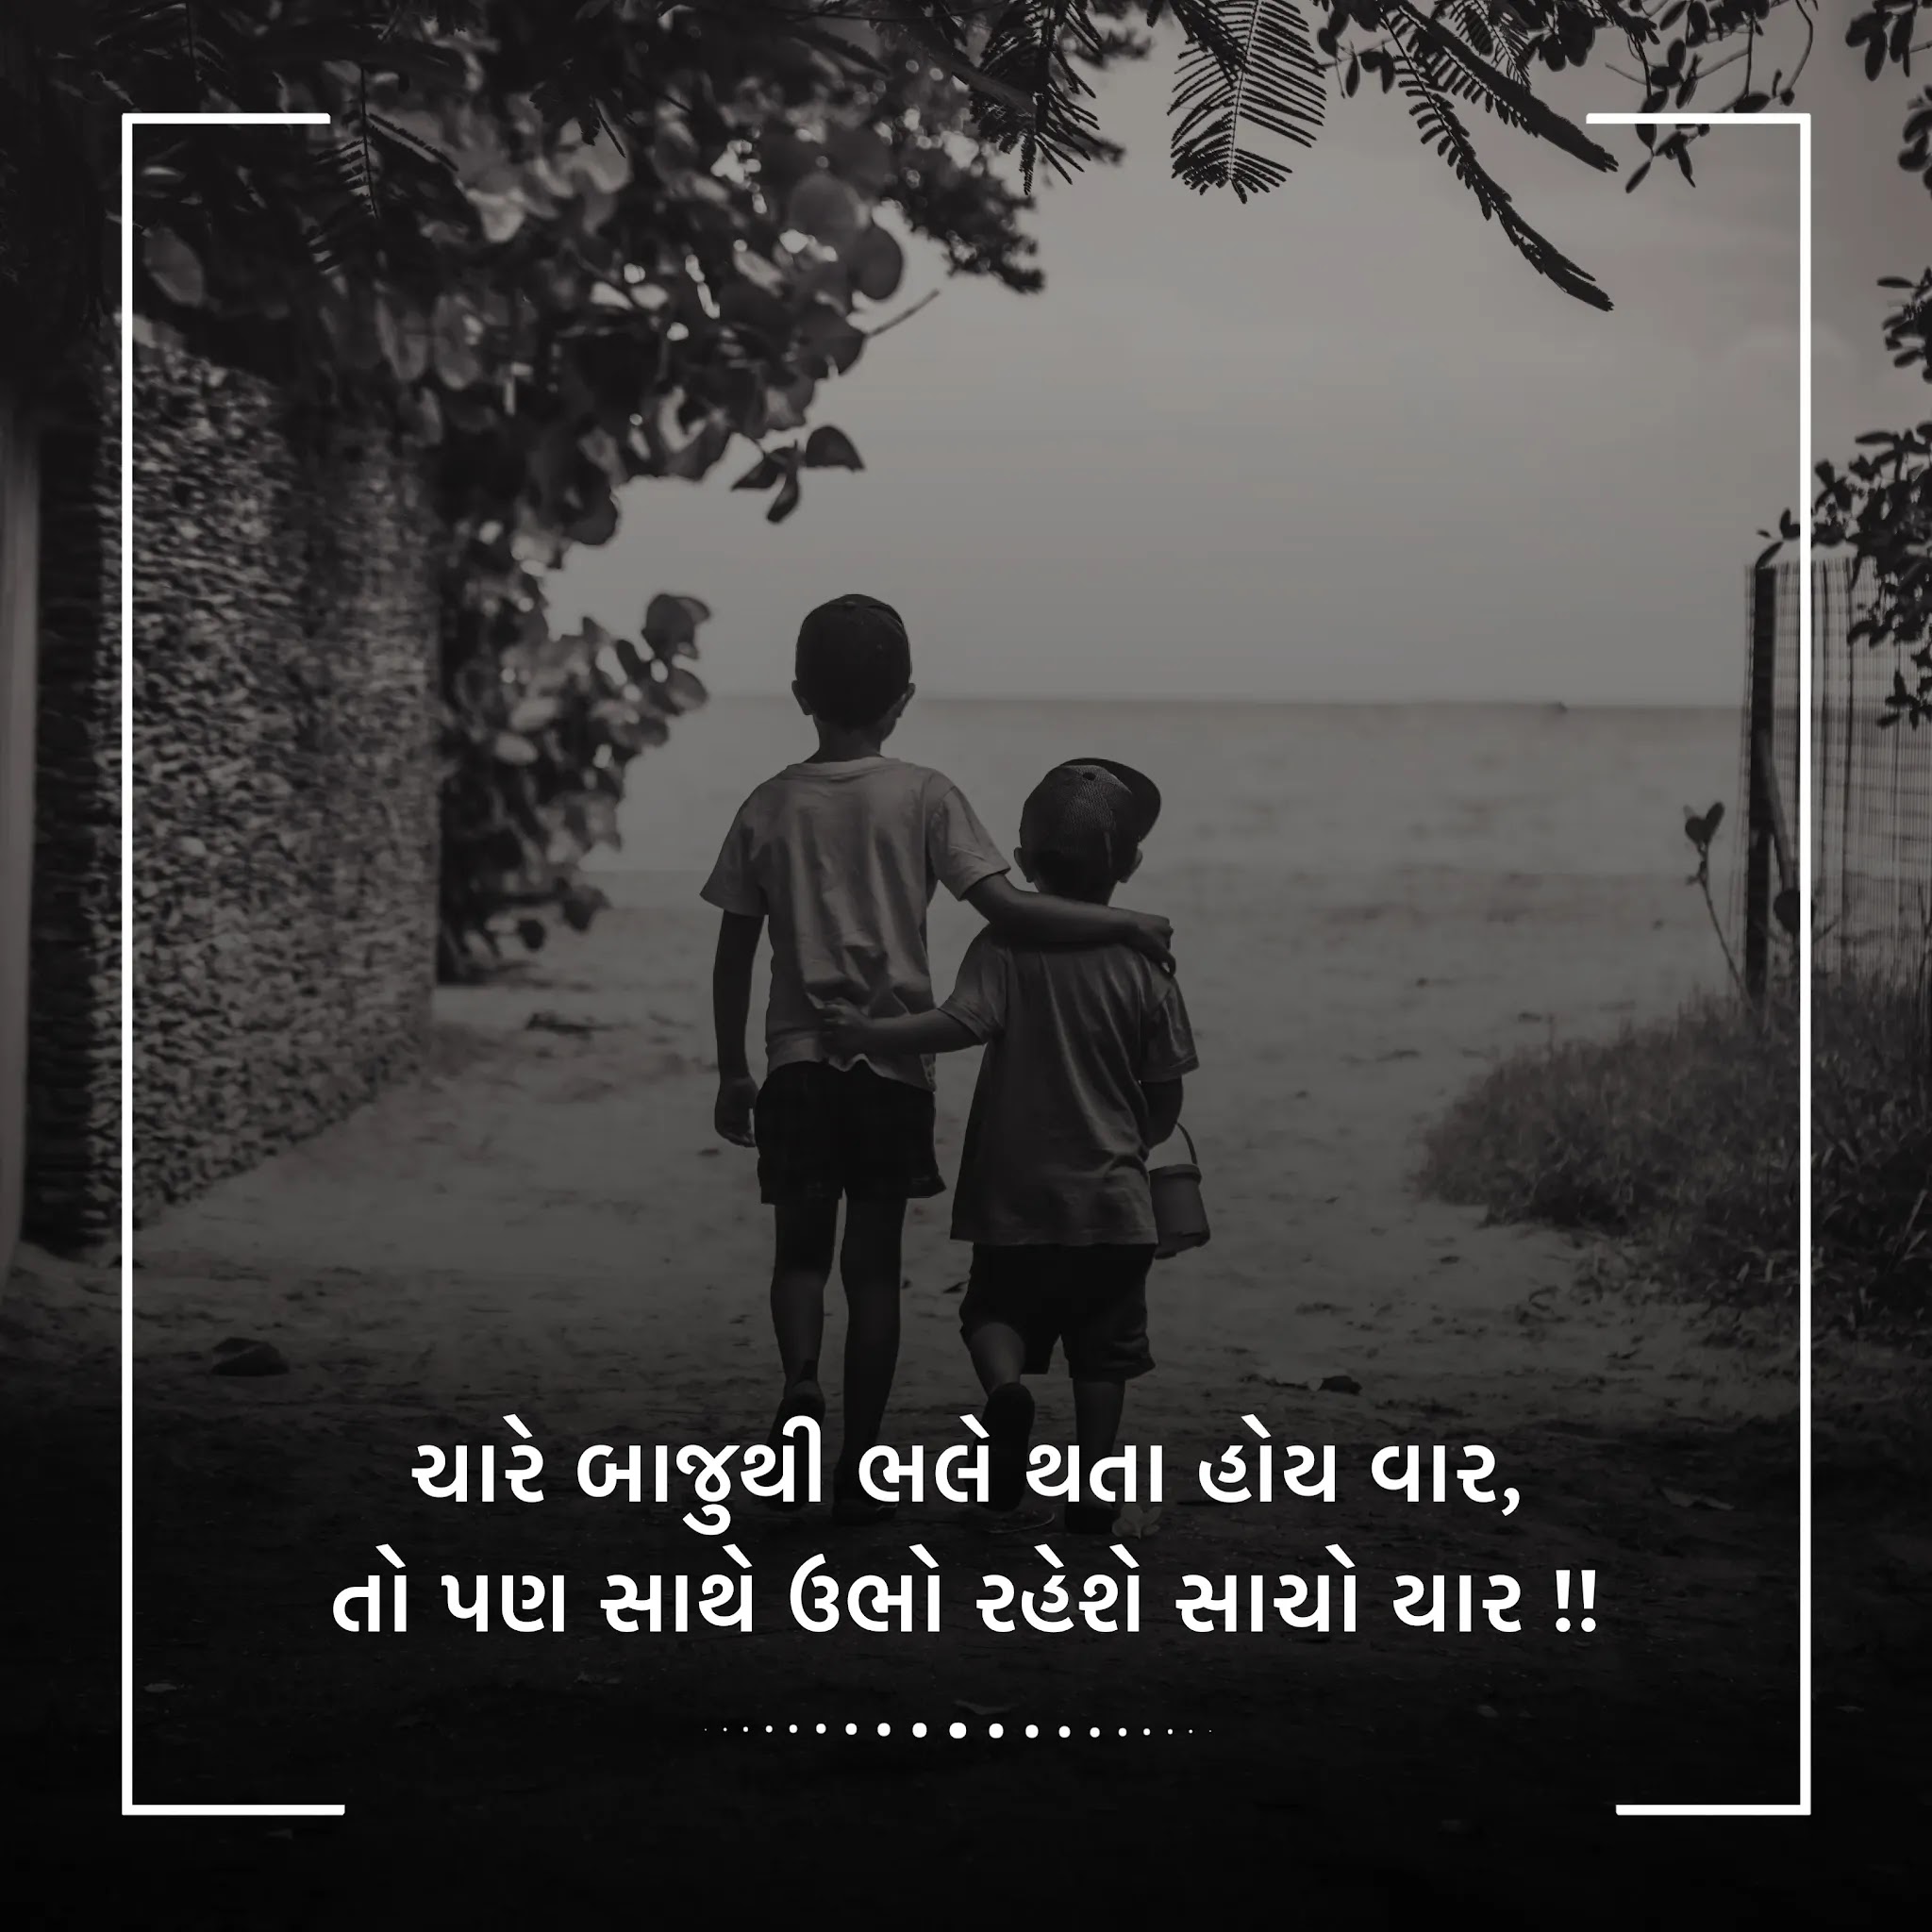 Gujarati Friendship Quotes on village friends image